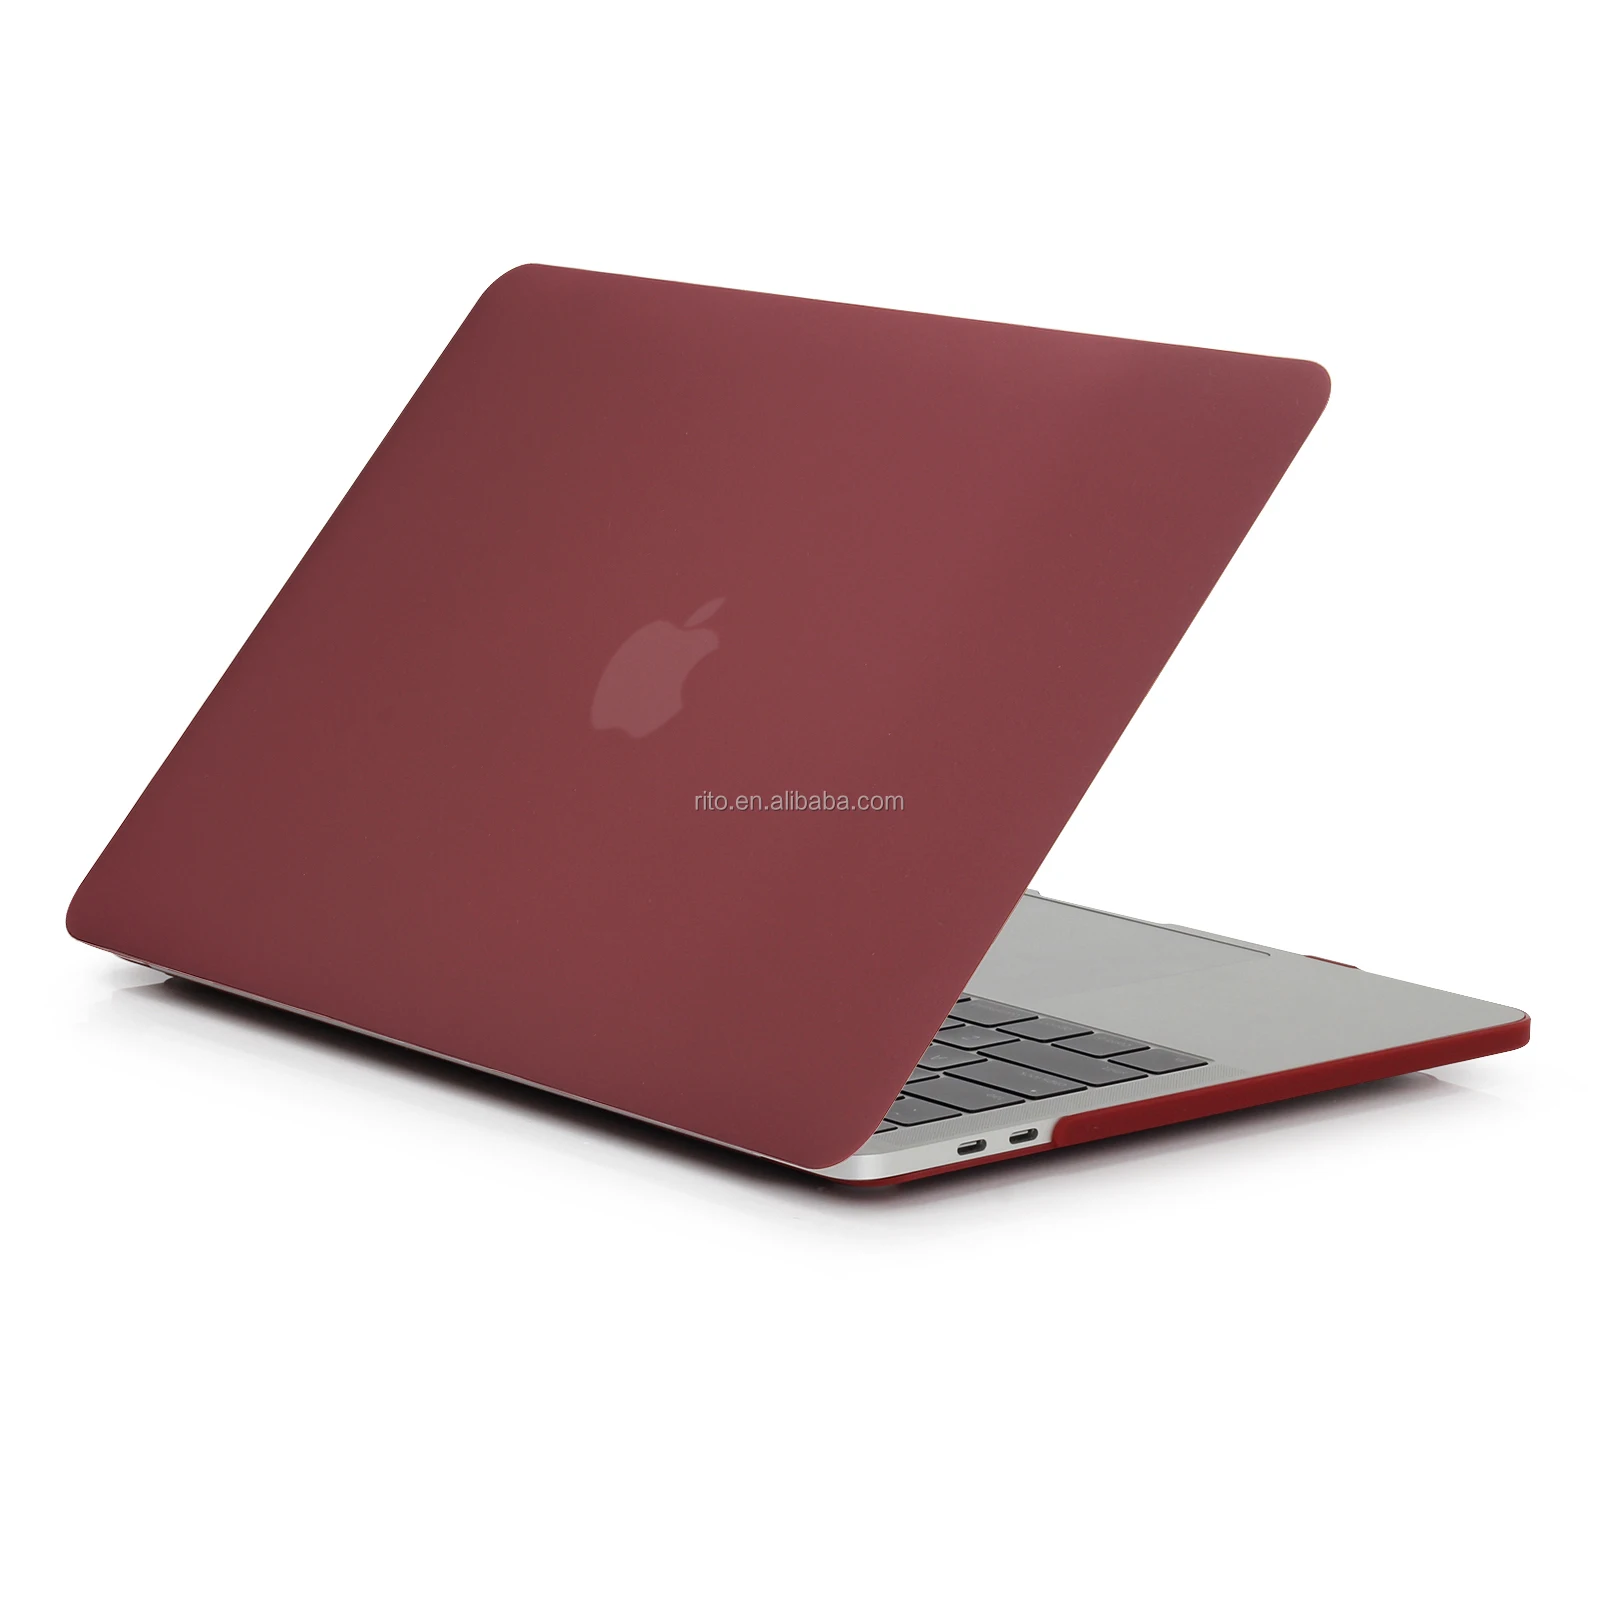 macbook pro covers 13 inch retina